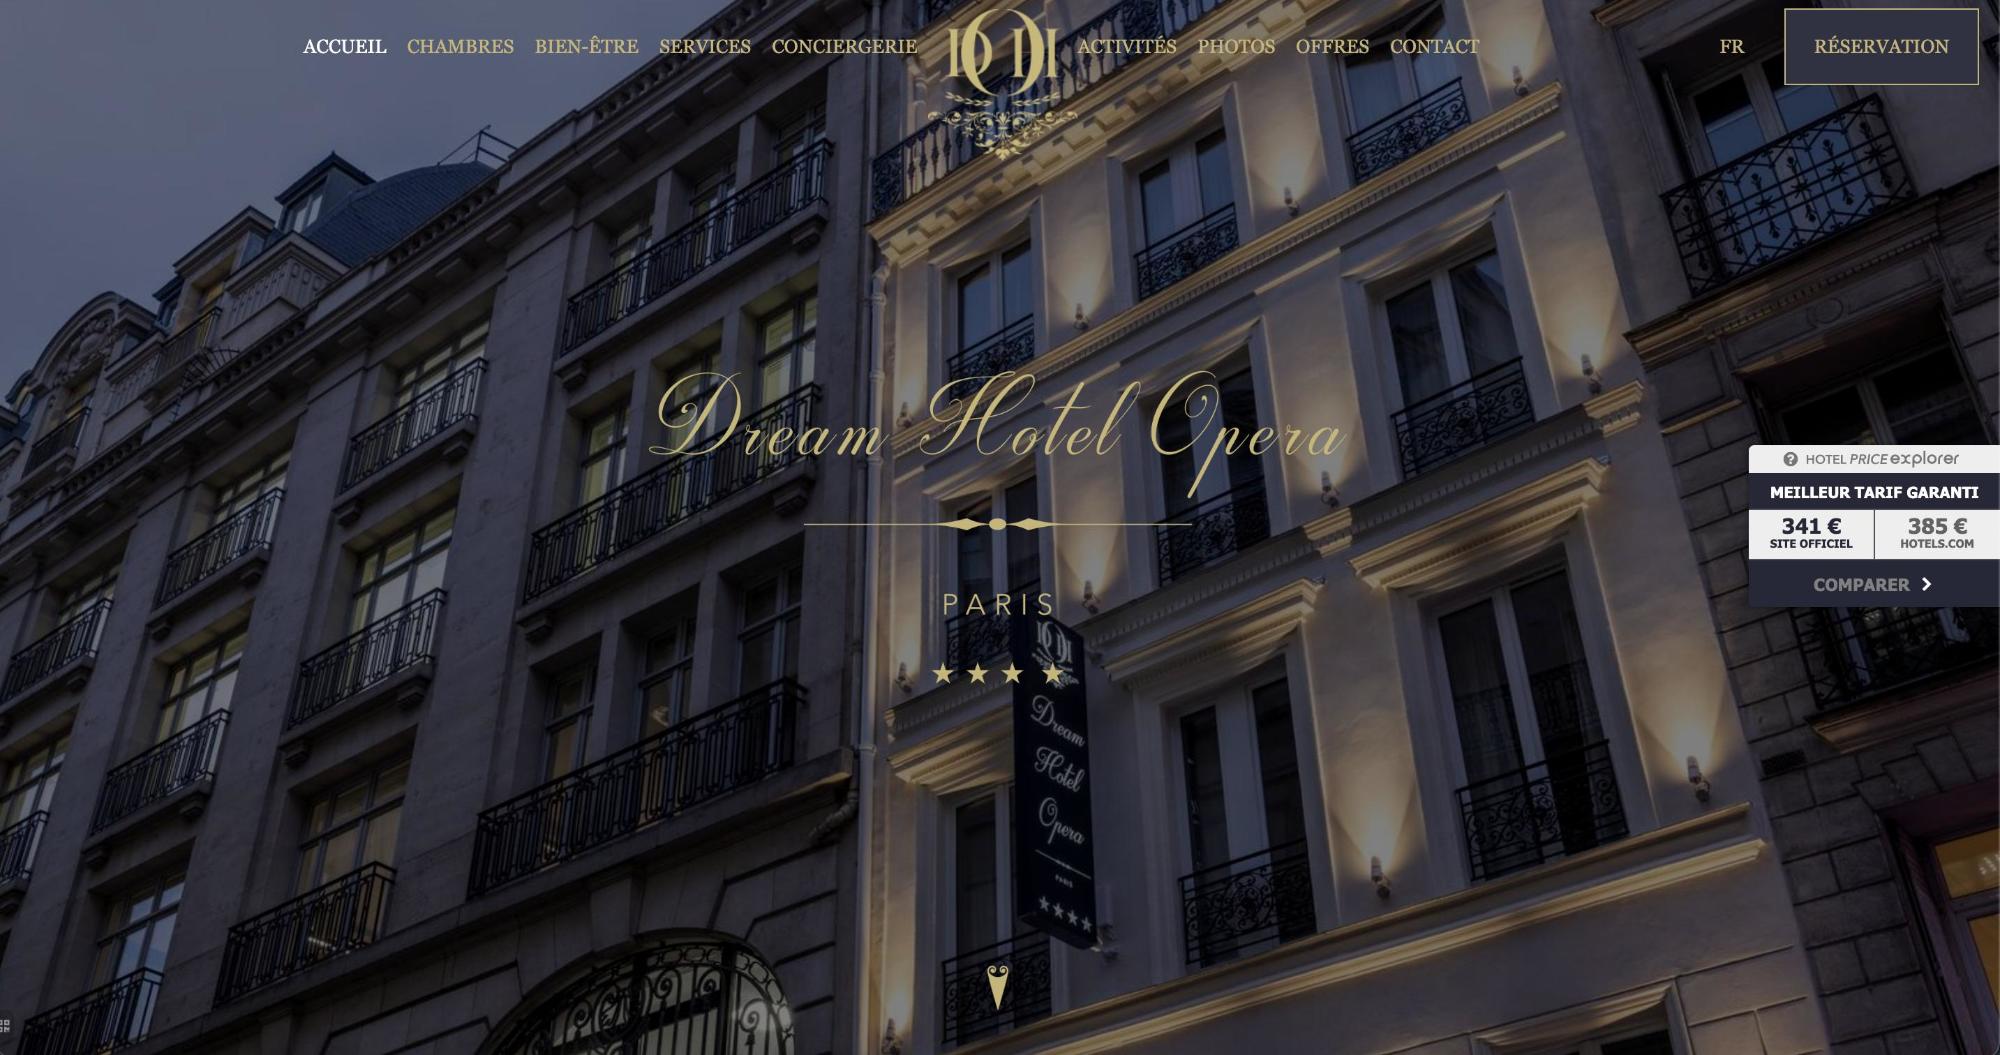 MMCréation Agency | Portfolio Dream Hotel Opera